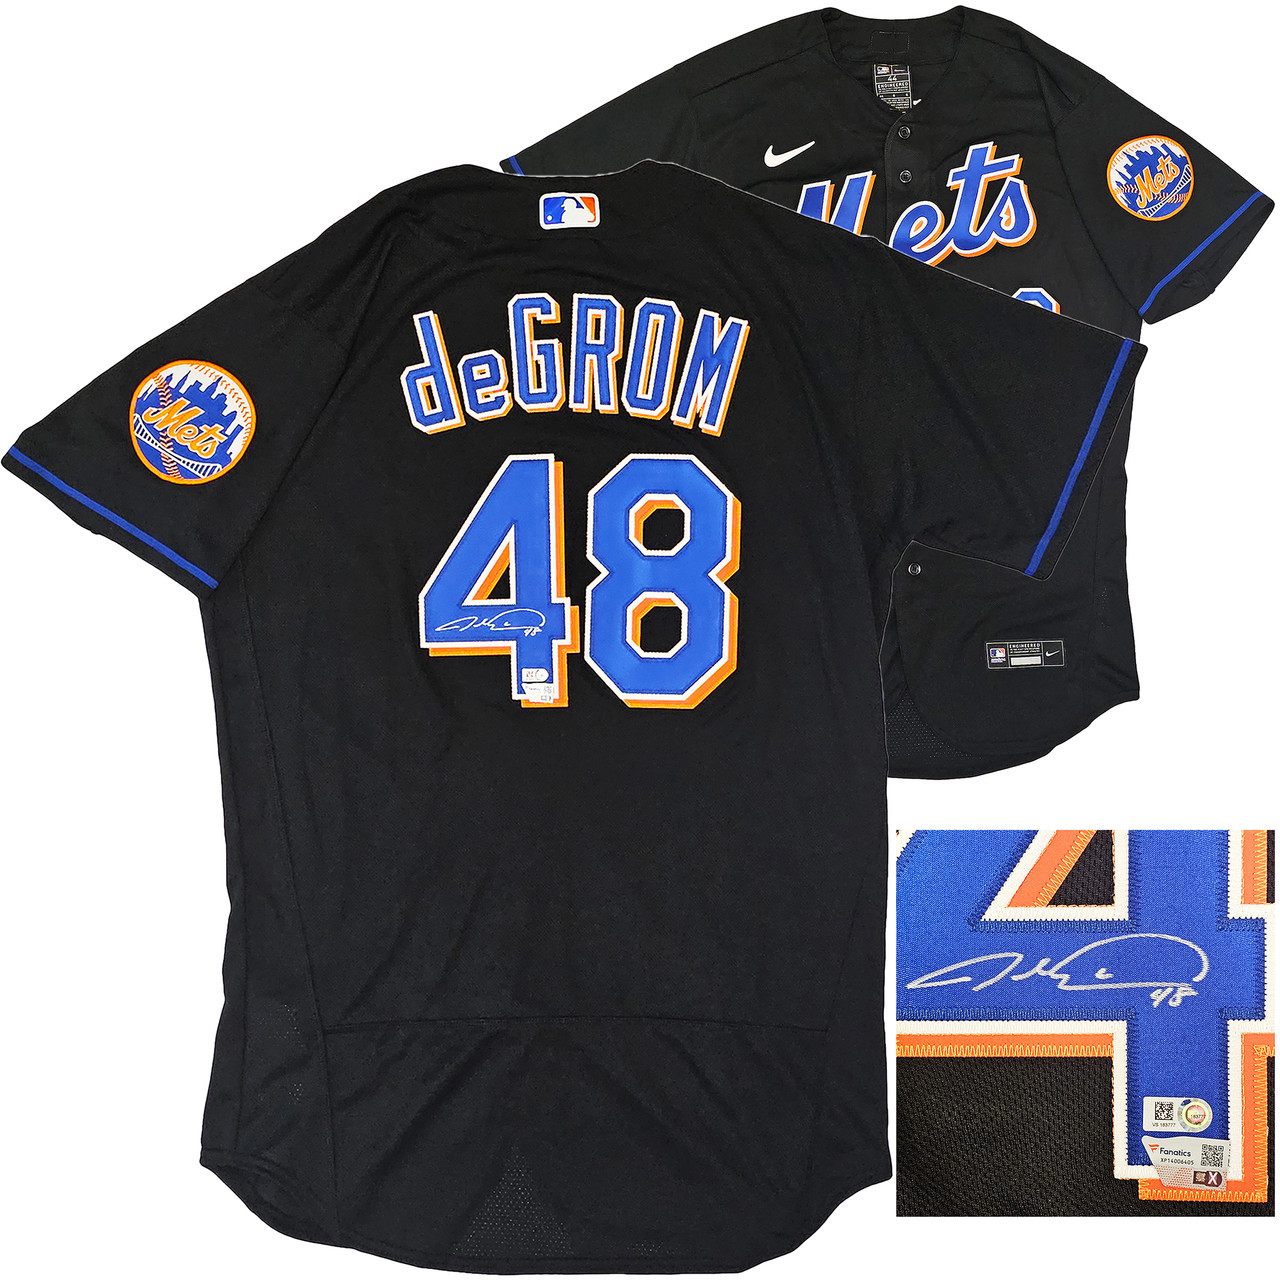 Jacob deGrom Autographed New York Mets Nike Baseball Jersey